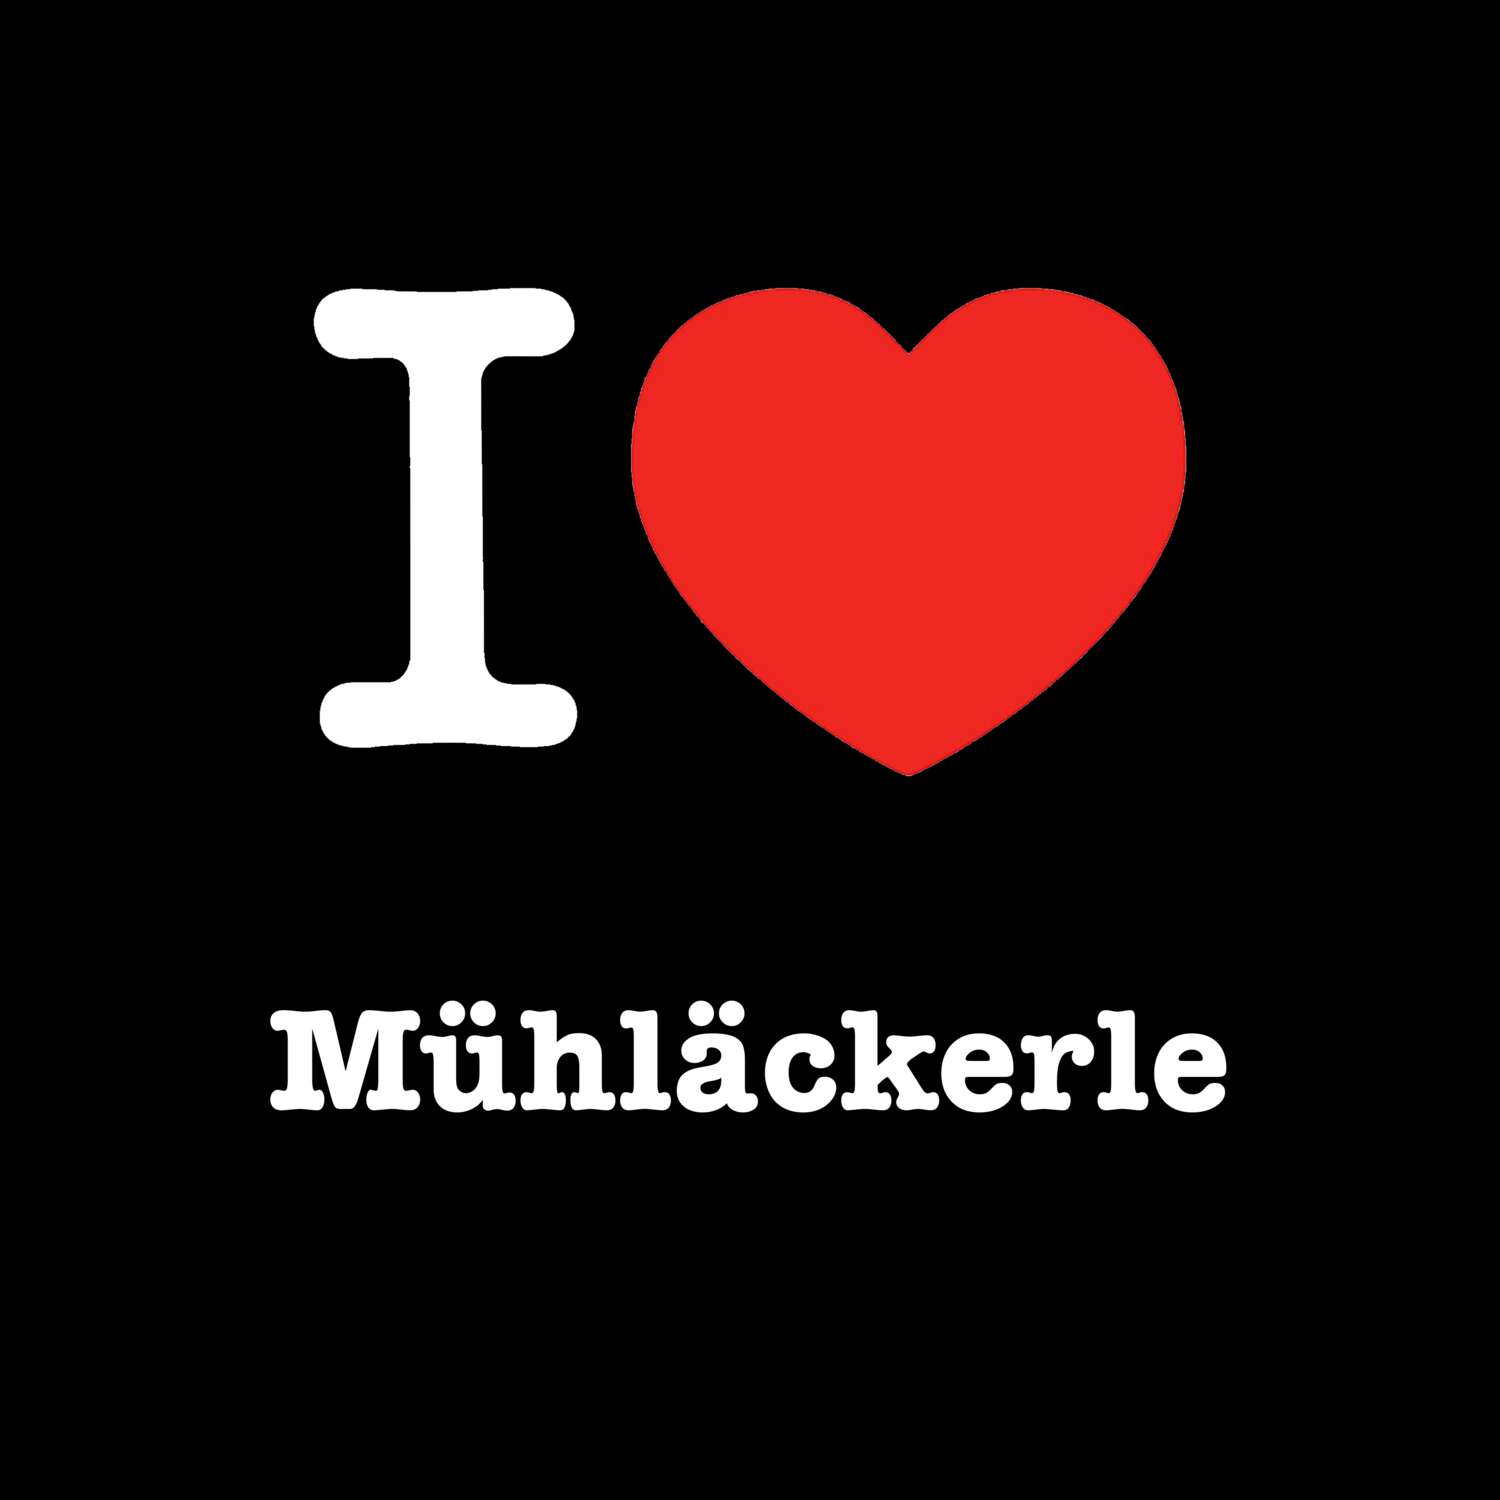 Mühläckerle T-Shirt »I love«